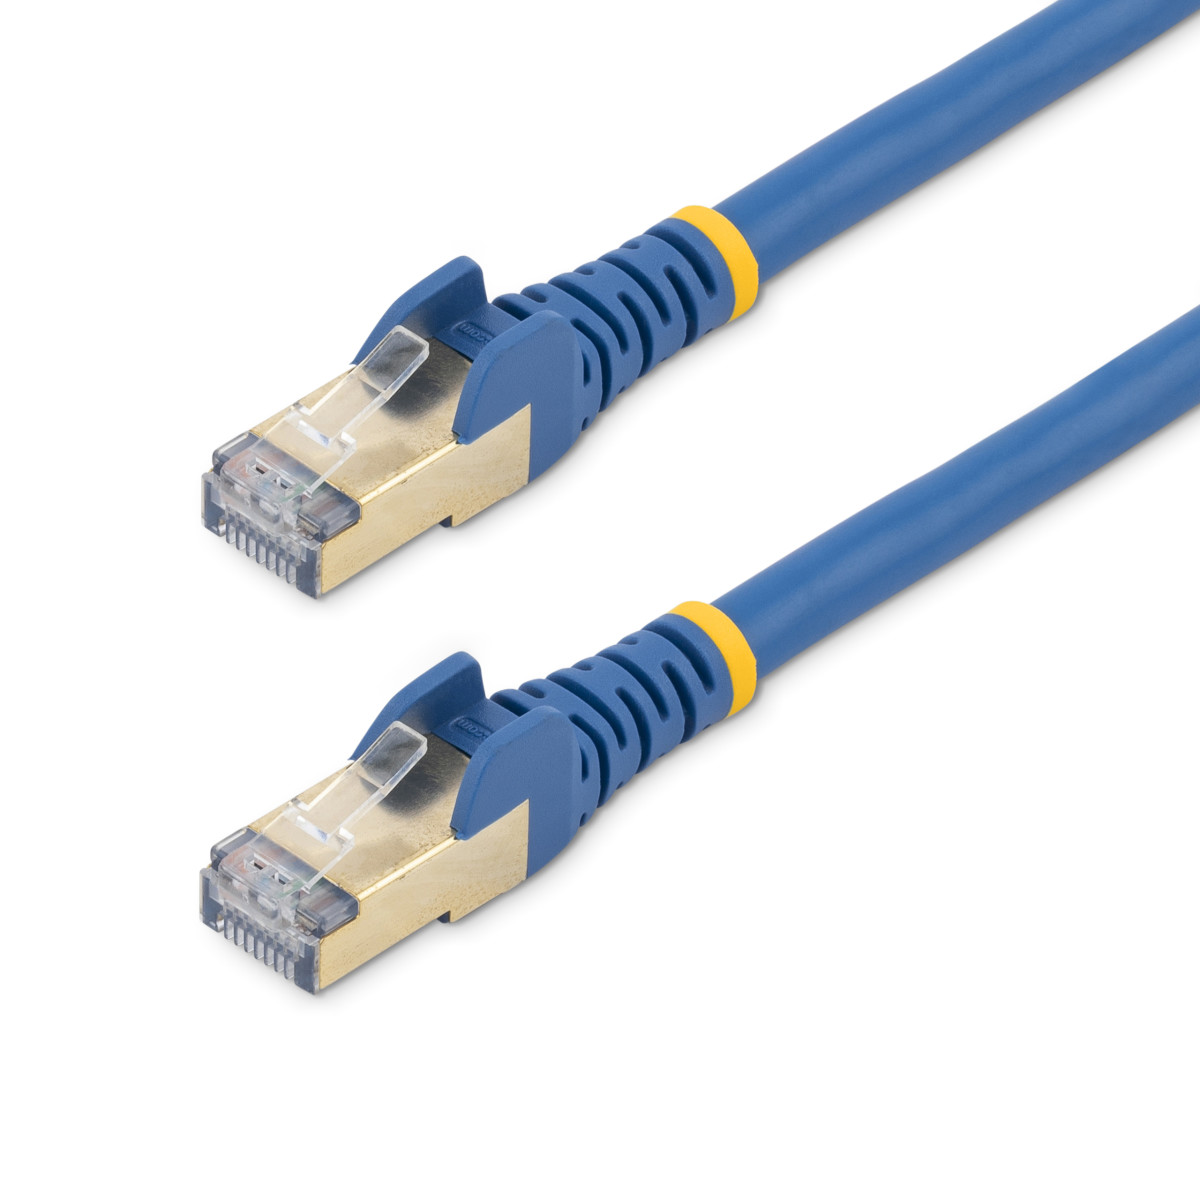 Cable - Blue CAT6a Ethernet Cable 5m